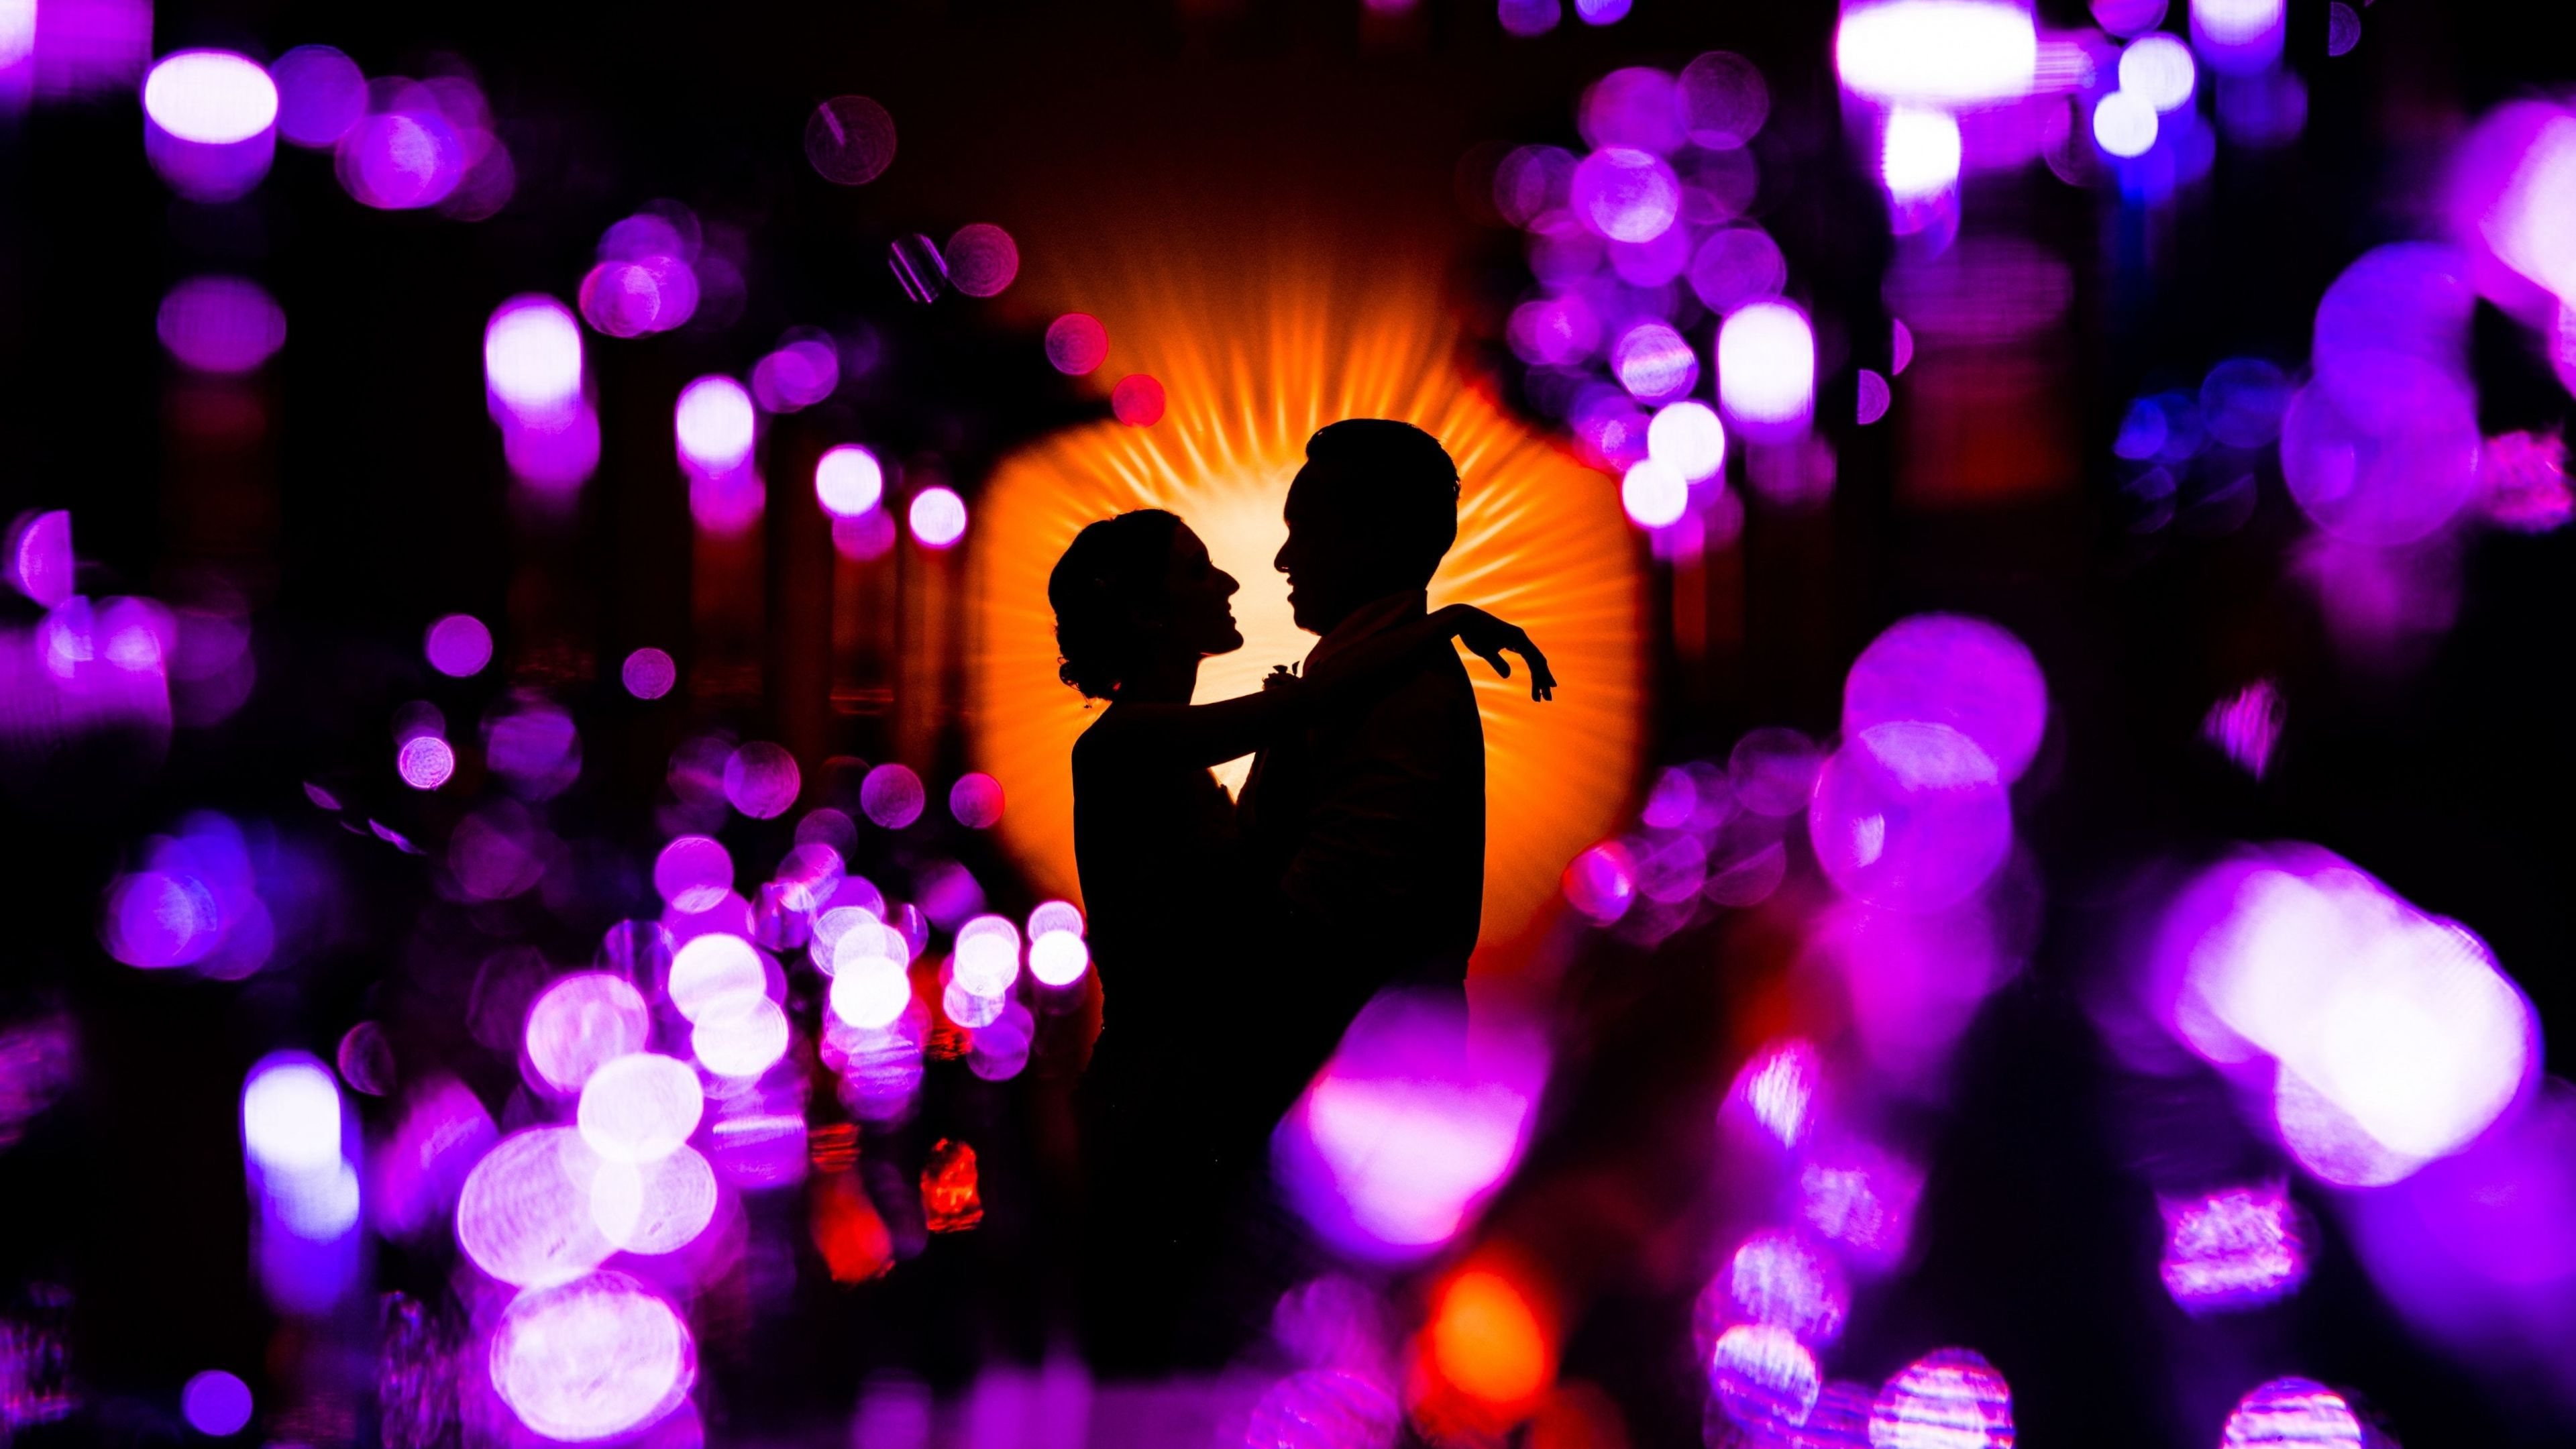 Download 3840x2160 wallpaper couple, romantic love, silhouette, bokeh, purple, 4k, uhd 16: widescreen, 3840x2160 HD image, background, 15289